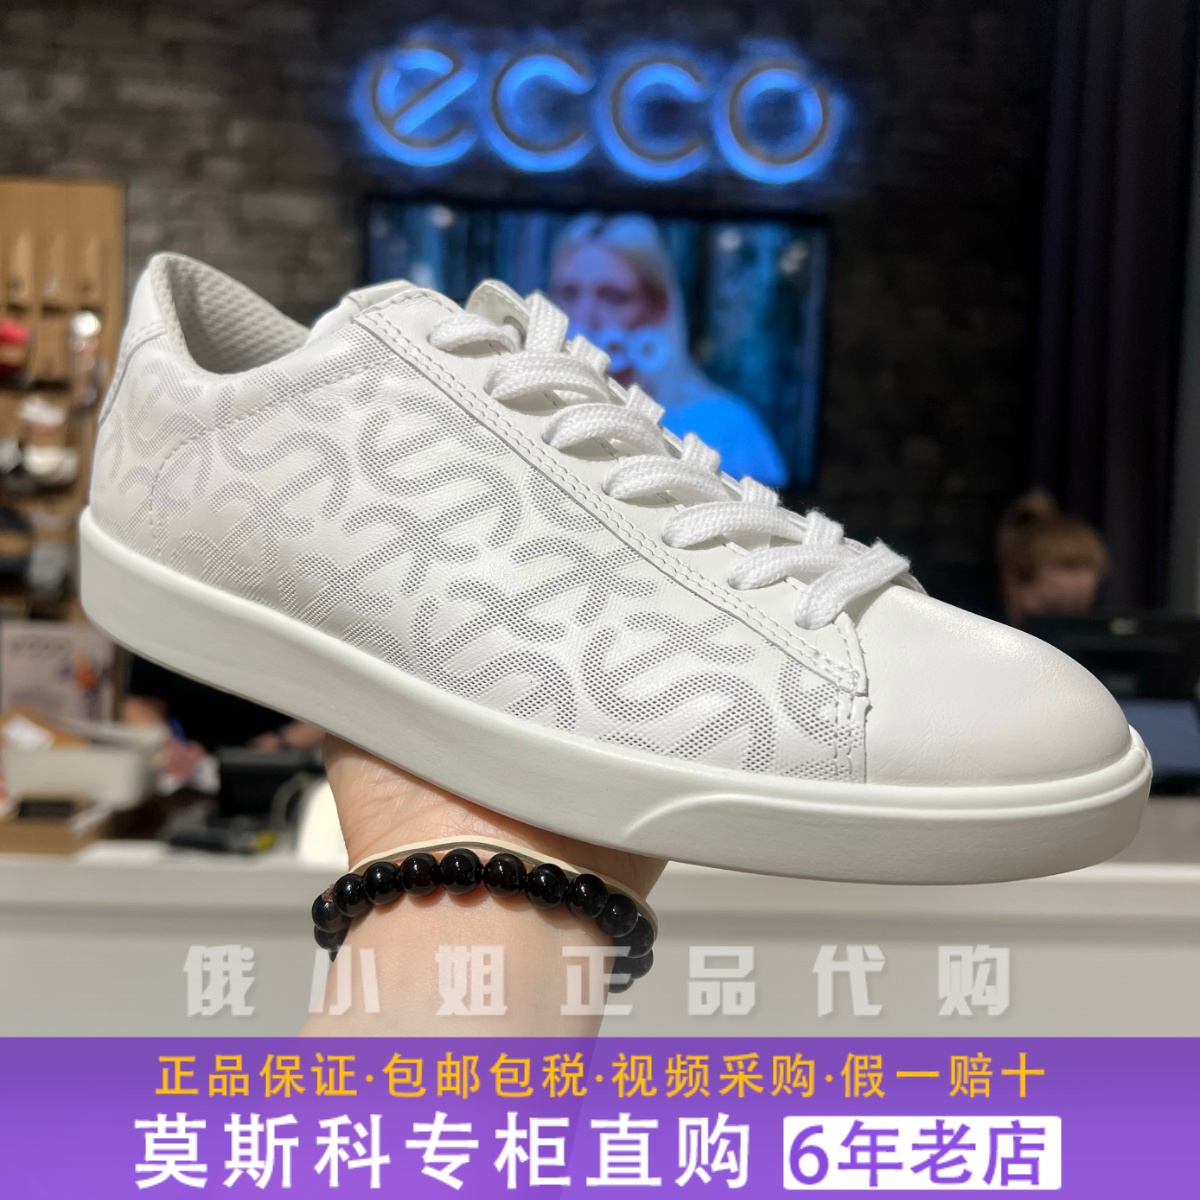 Ecco/爱步真皮小白鞋时尚休闲鞋